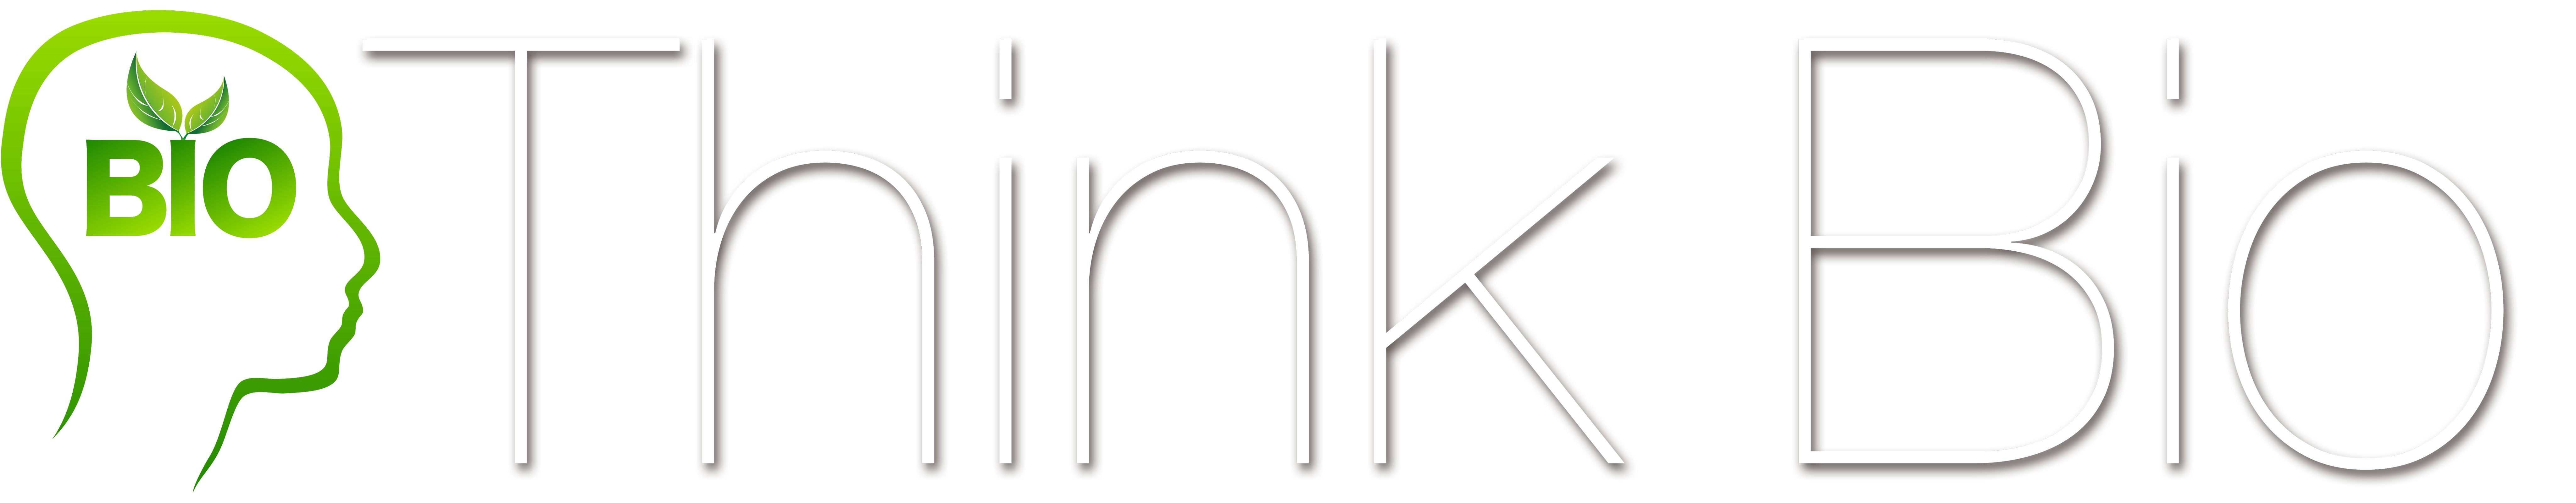 ThinkBio